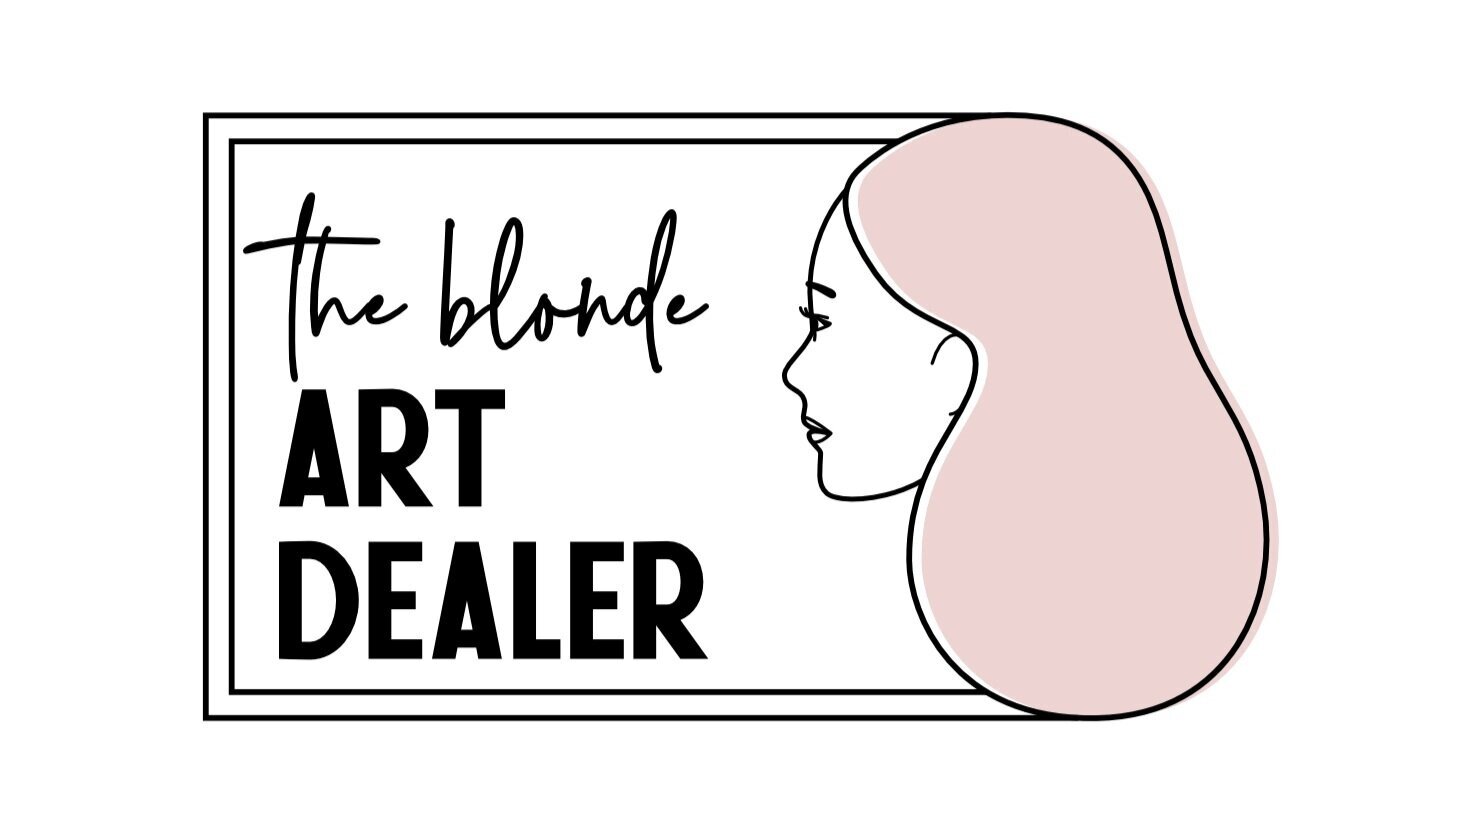 The Blonde Art Dealer